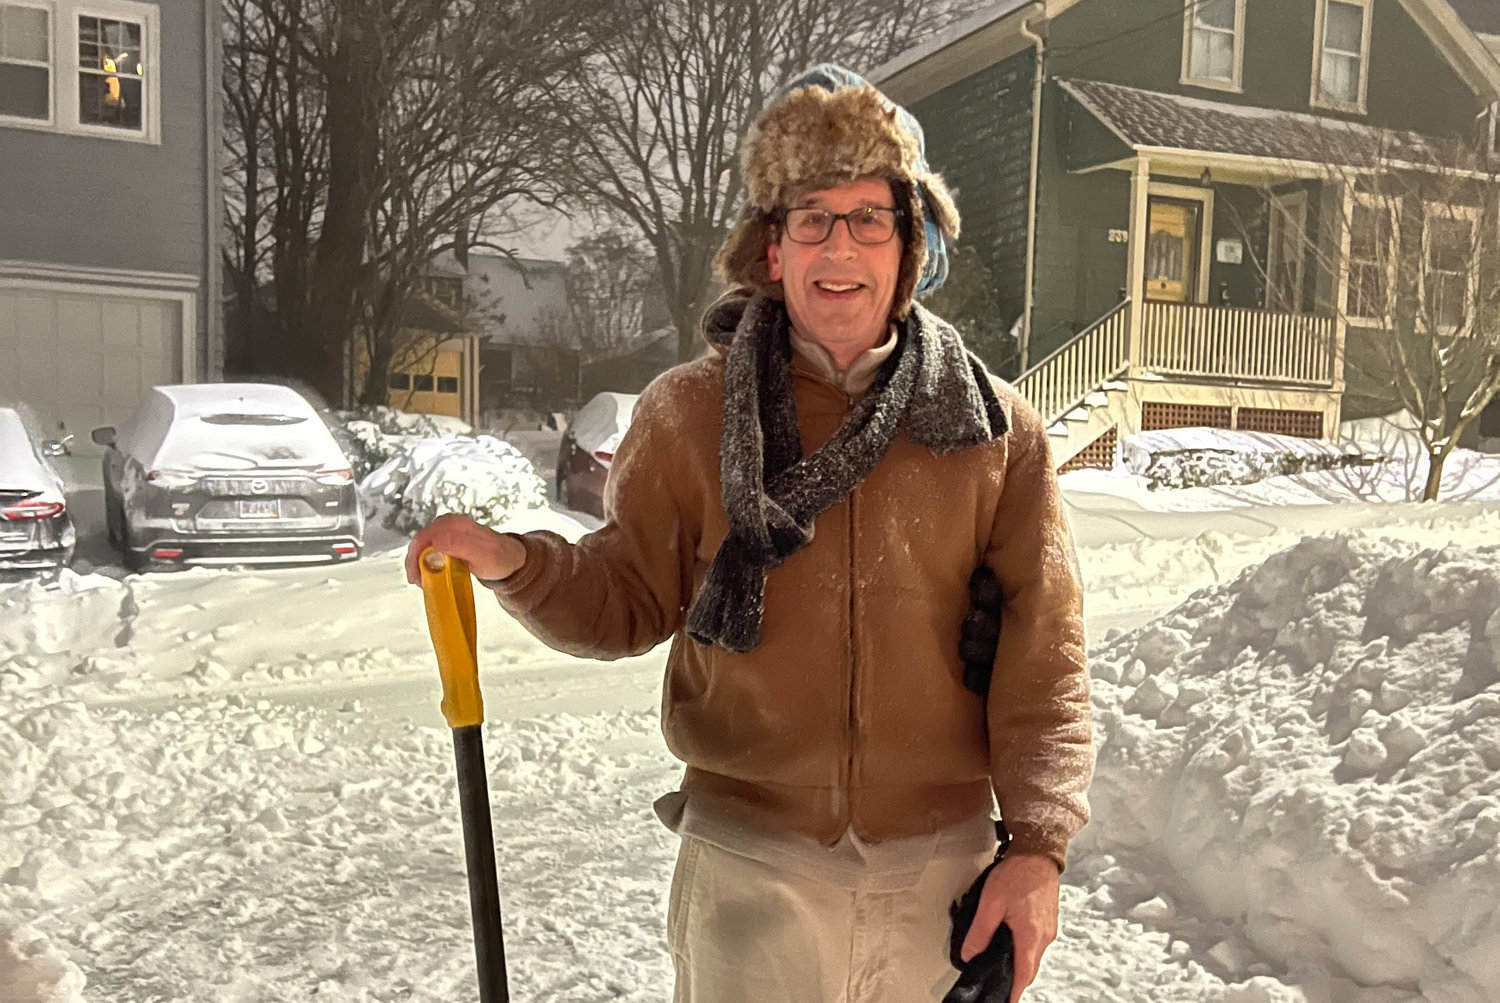 SNA’s snow brigade returns this season and is seeking volunteer shovelers